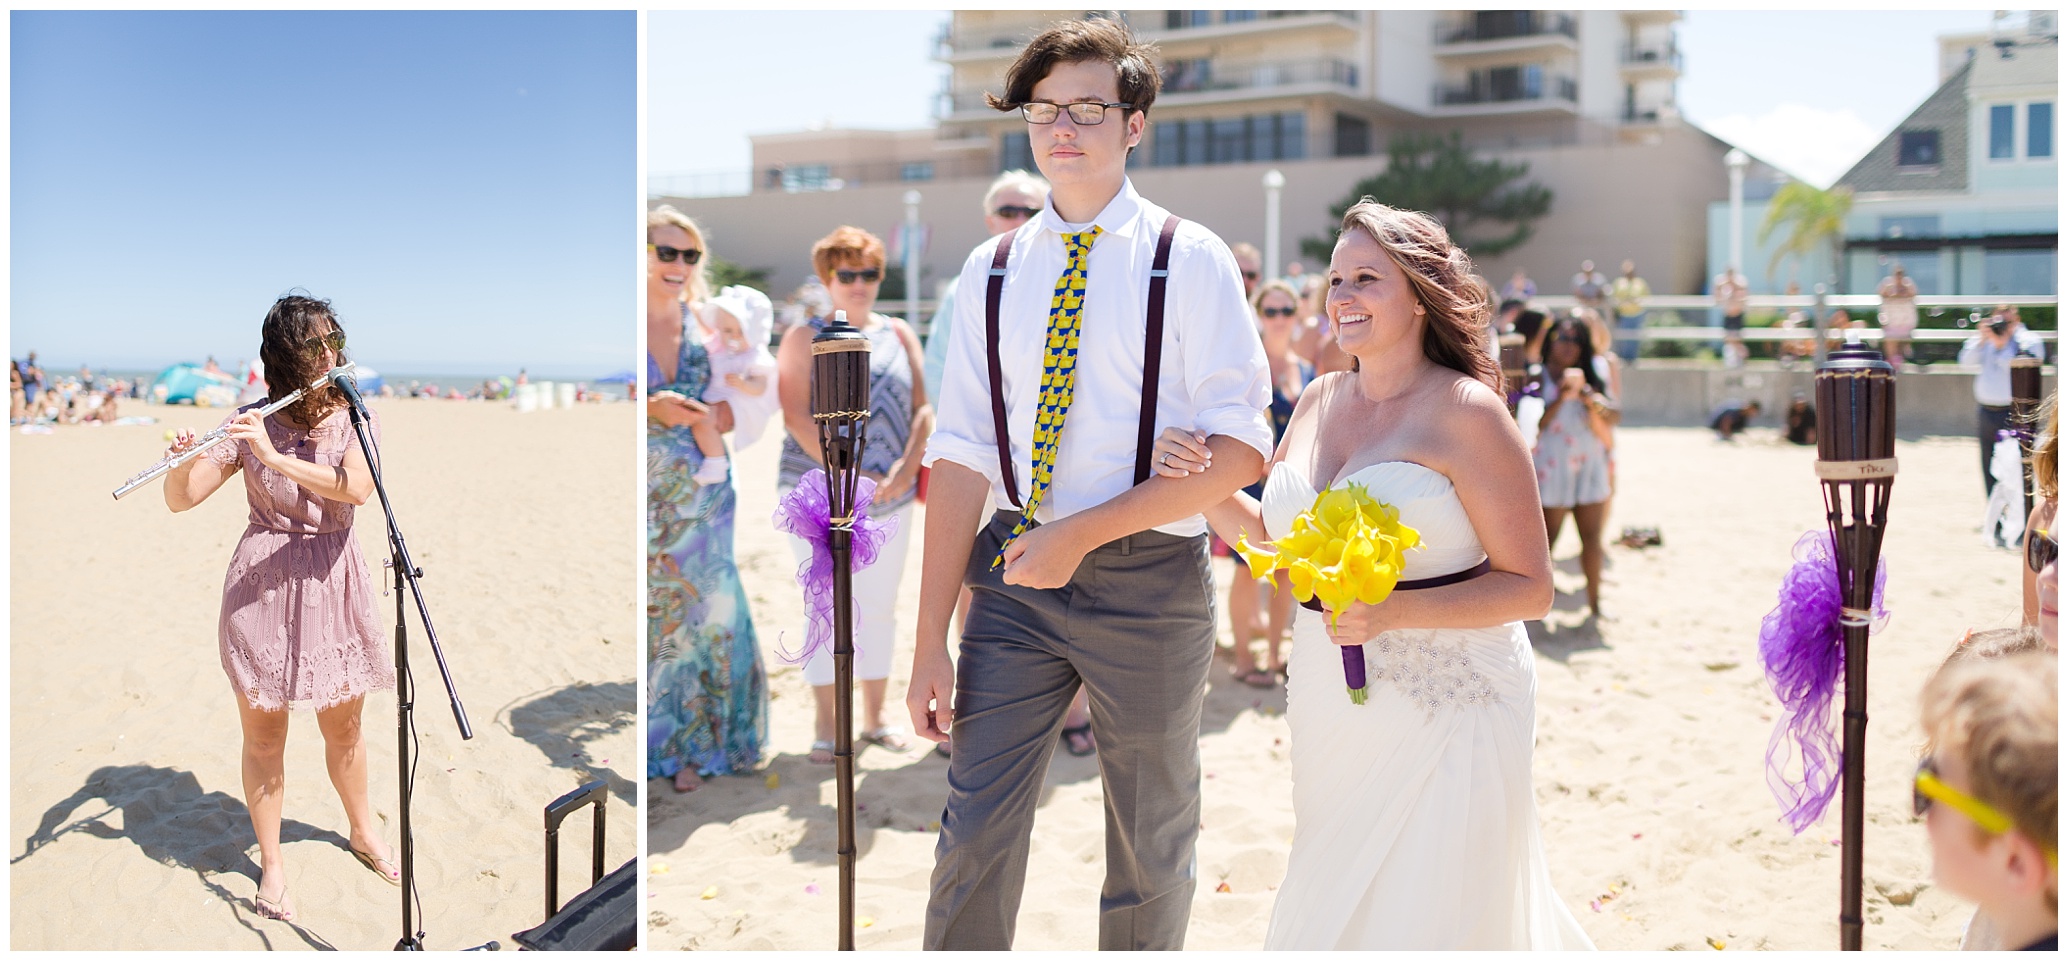 Sunday Fun-Day VA Beach Wedding Luke and Ashley Photography 